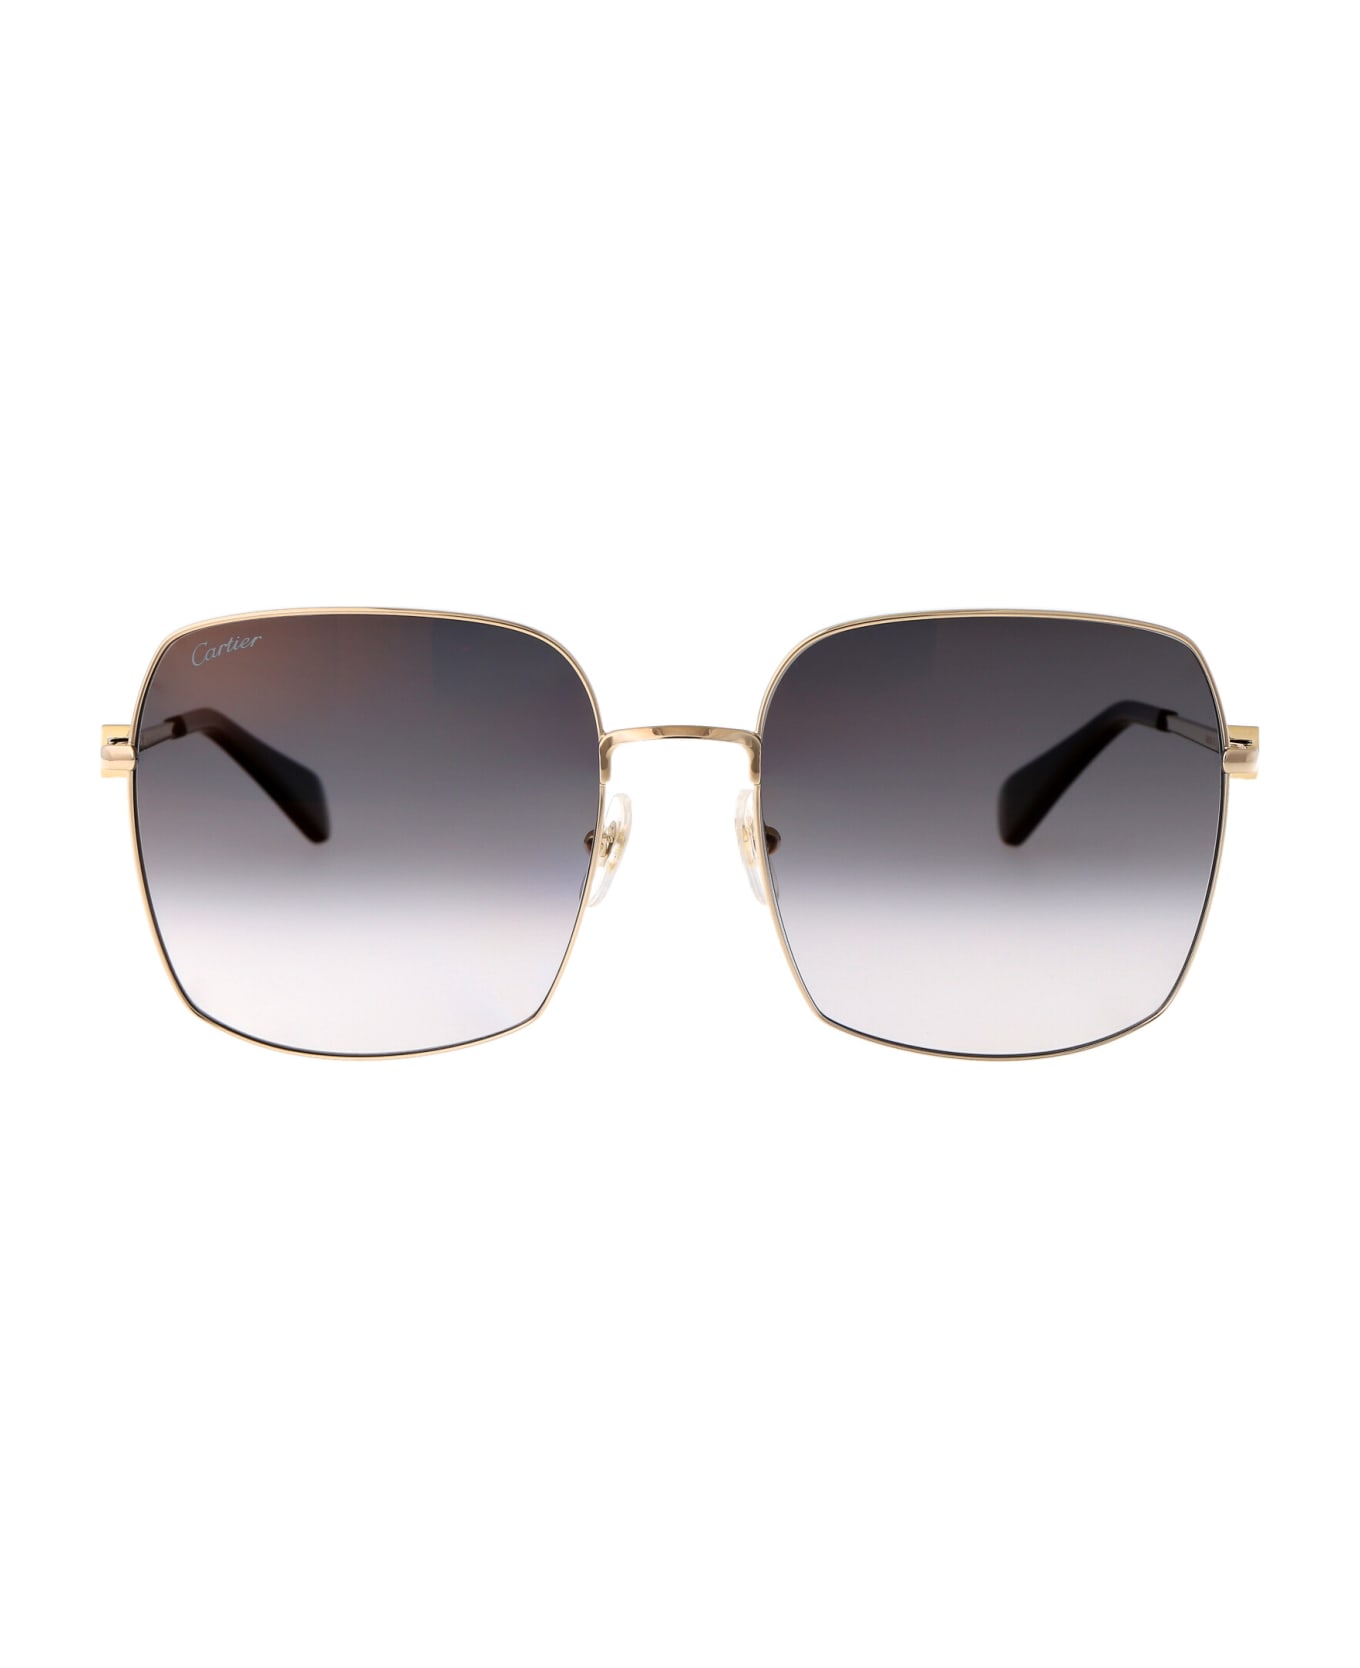 Cartier Eyewear Ct0401s Sunglasses - 001 GOLD GOLD GREY サングラス